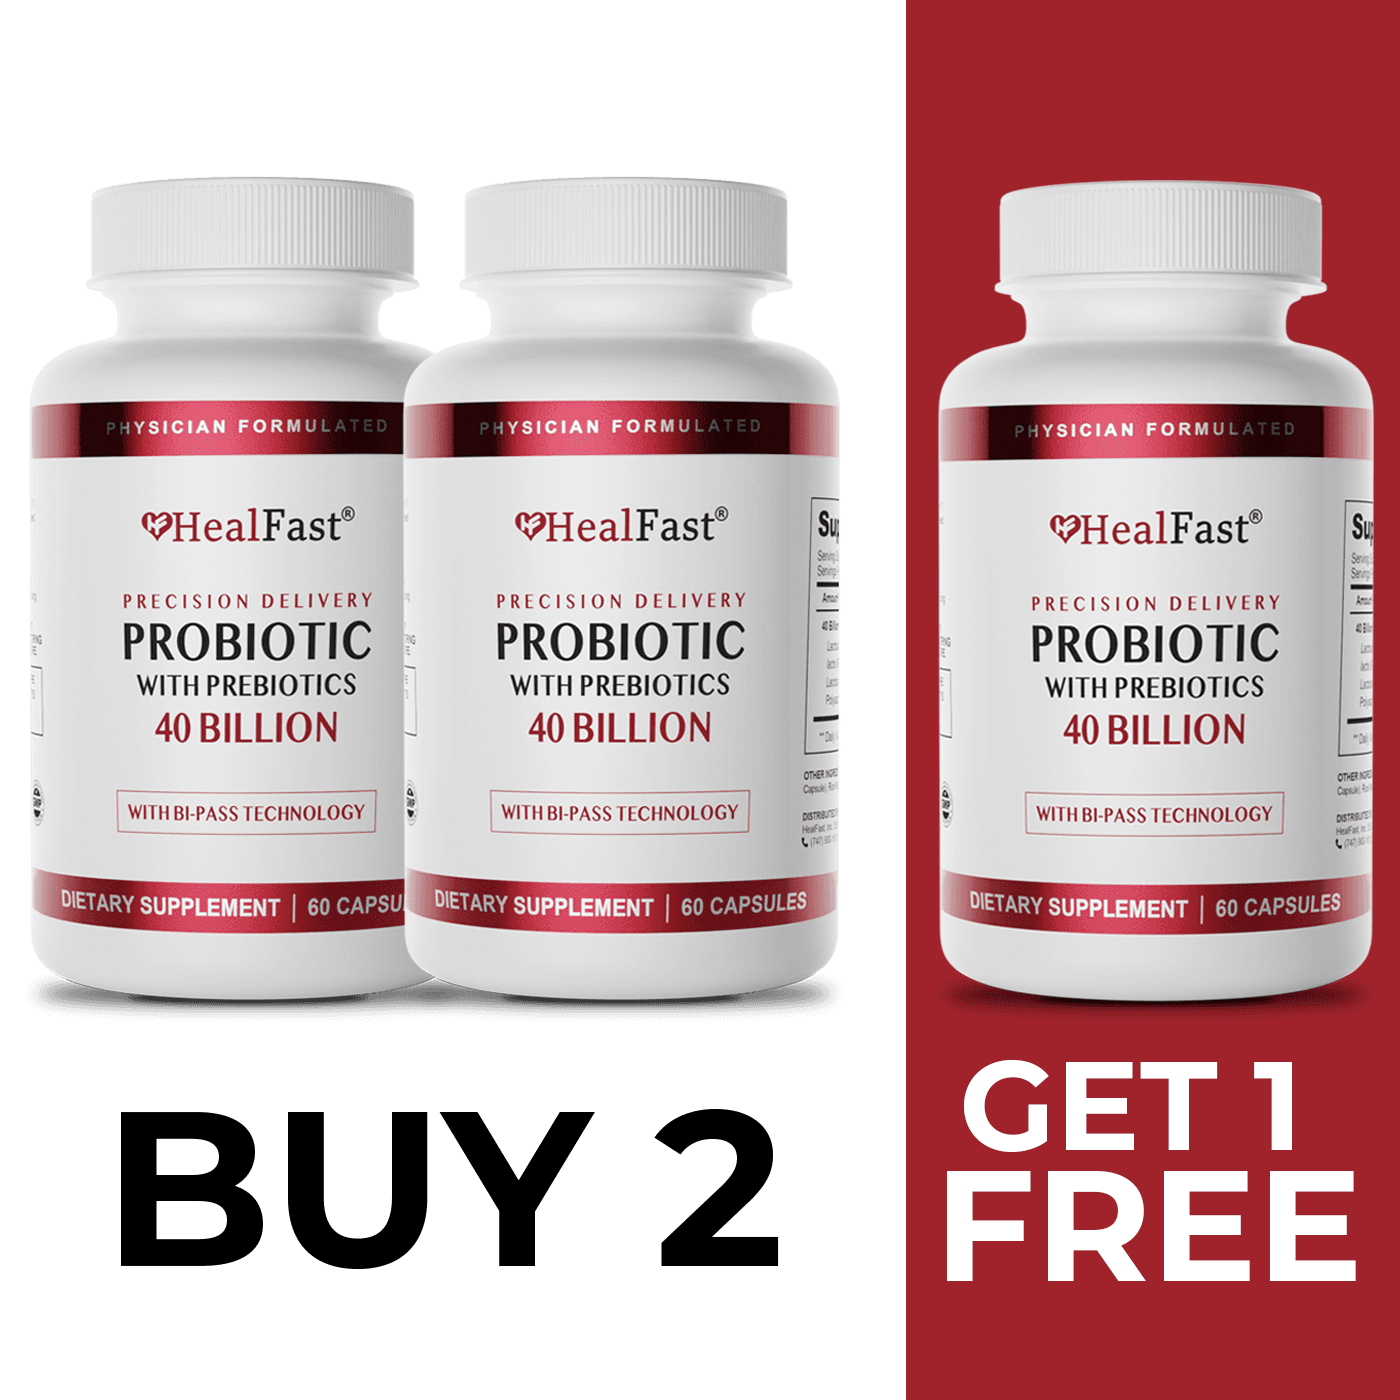 Probiotic 40 Billion CFU with Prebiotics WS